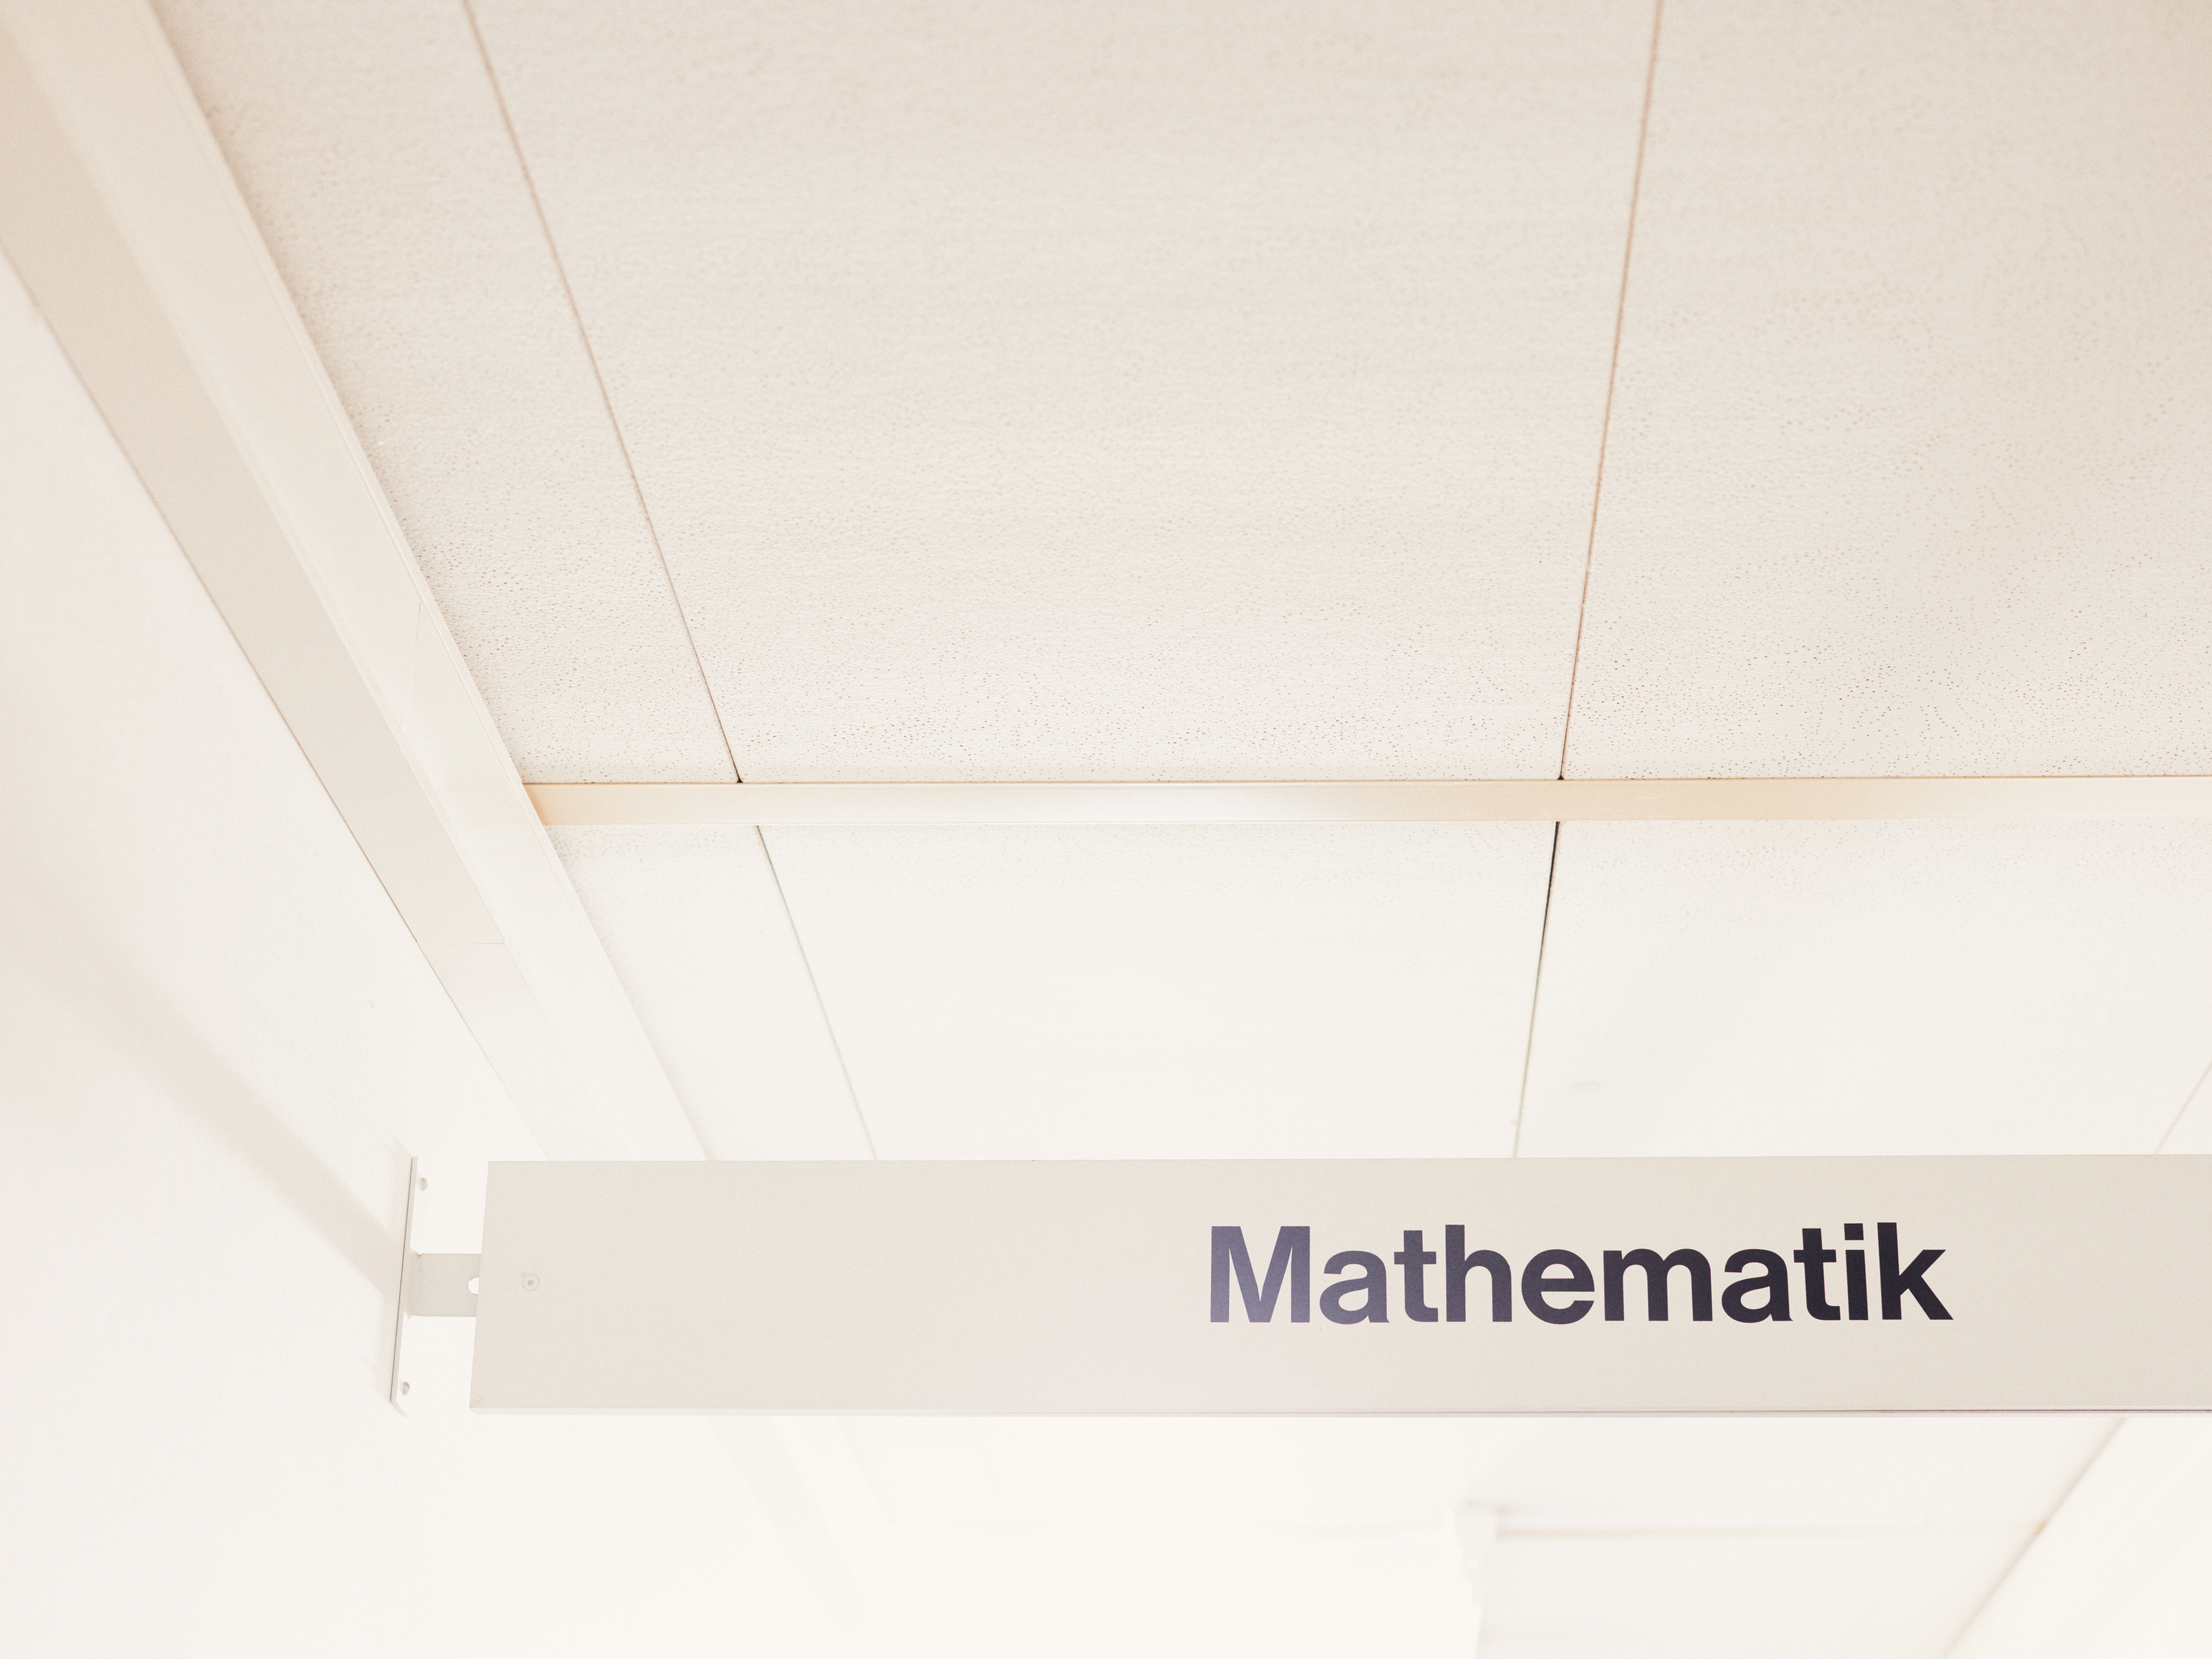 Sign with inscription "Mathematics"